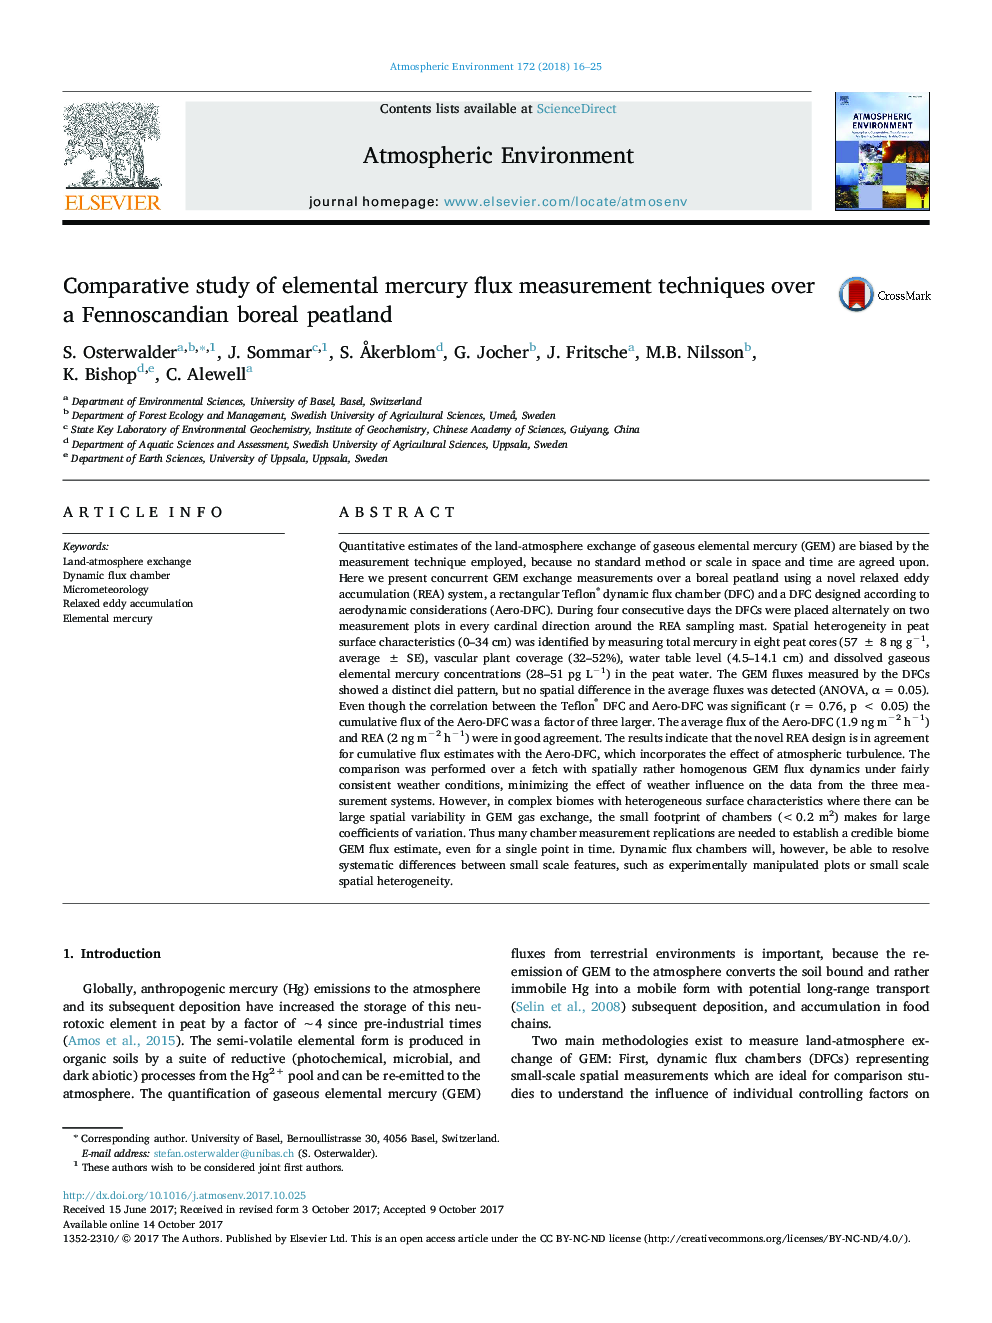 Comparative study of elemental mercury flux measurement techniques over a Fennoscandian boreal peatland